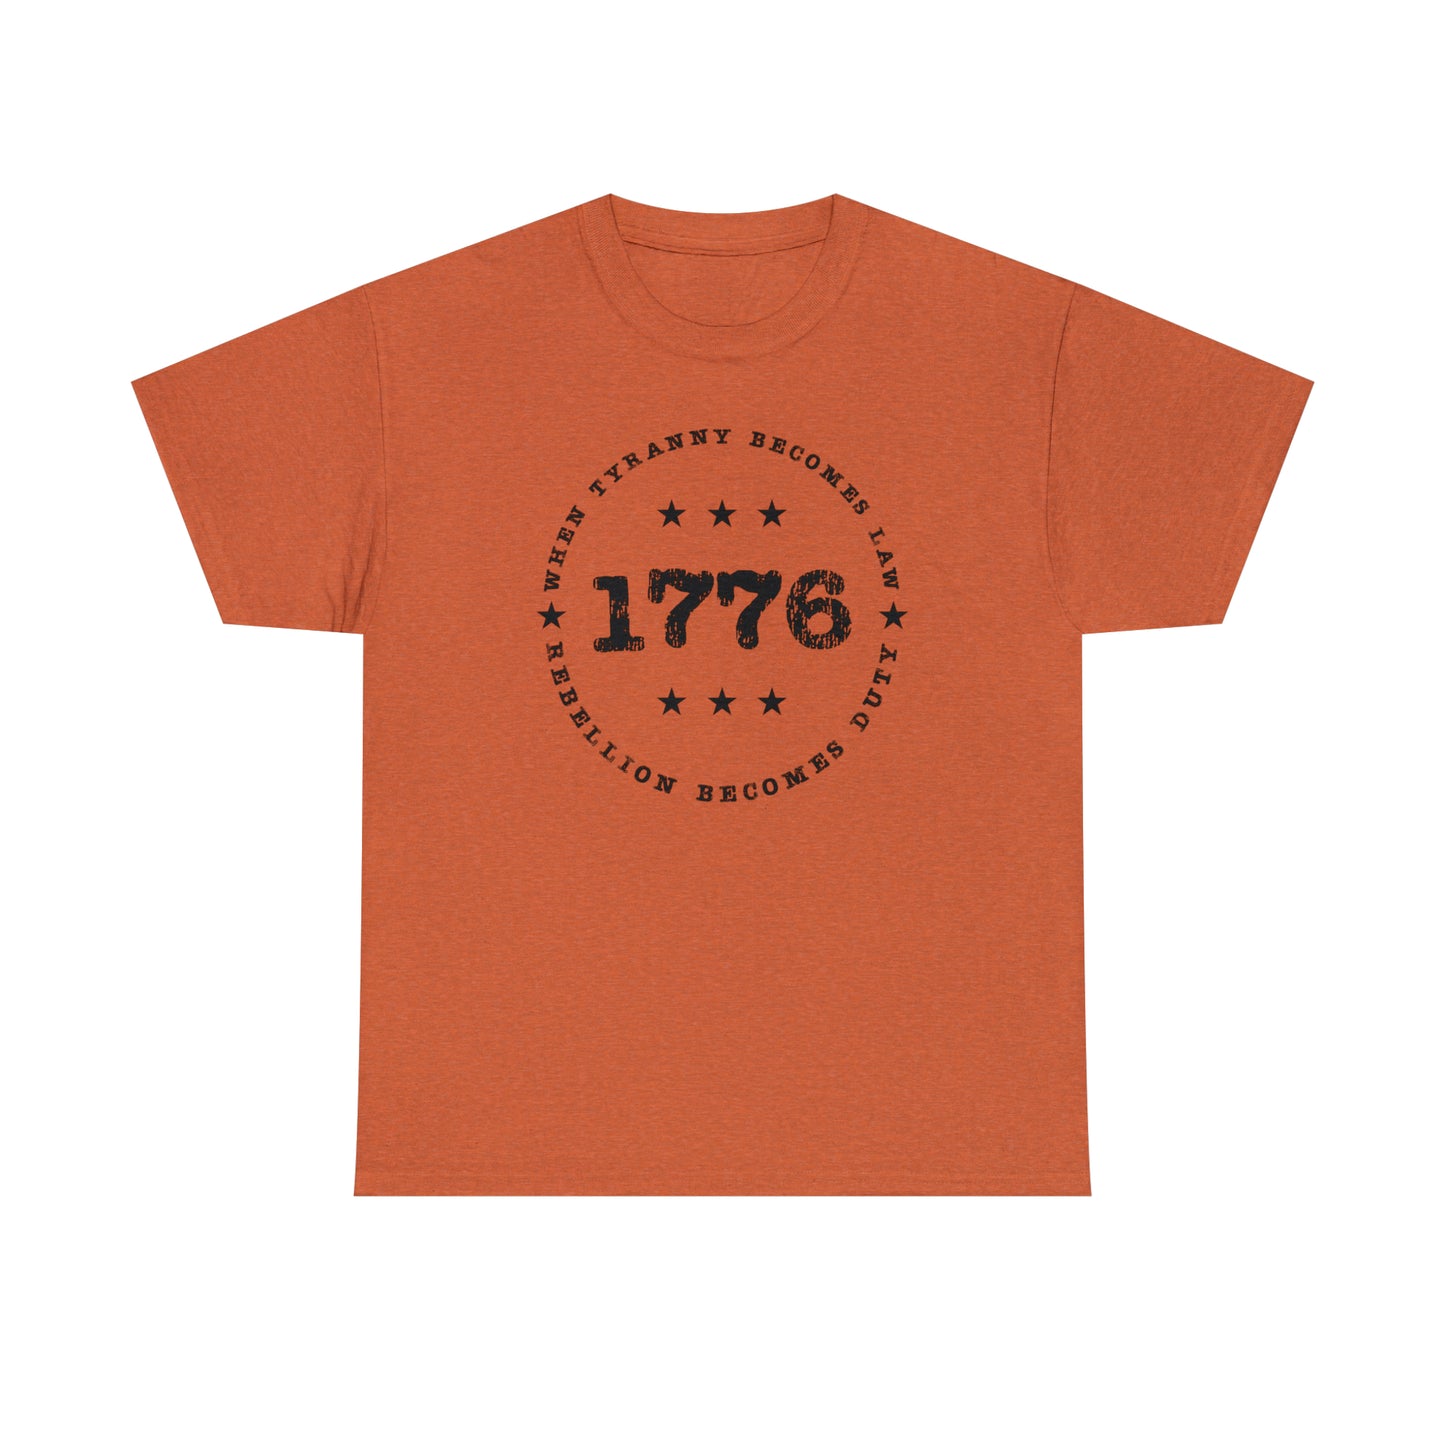 Tyranny T-Shirt For Rebellion TShirt For 1776 T Shirt For Patriotic Shirt For Conservative TShirt For MAGA Tee